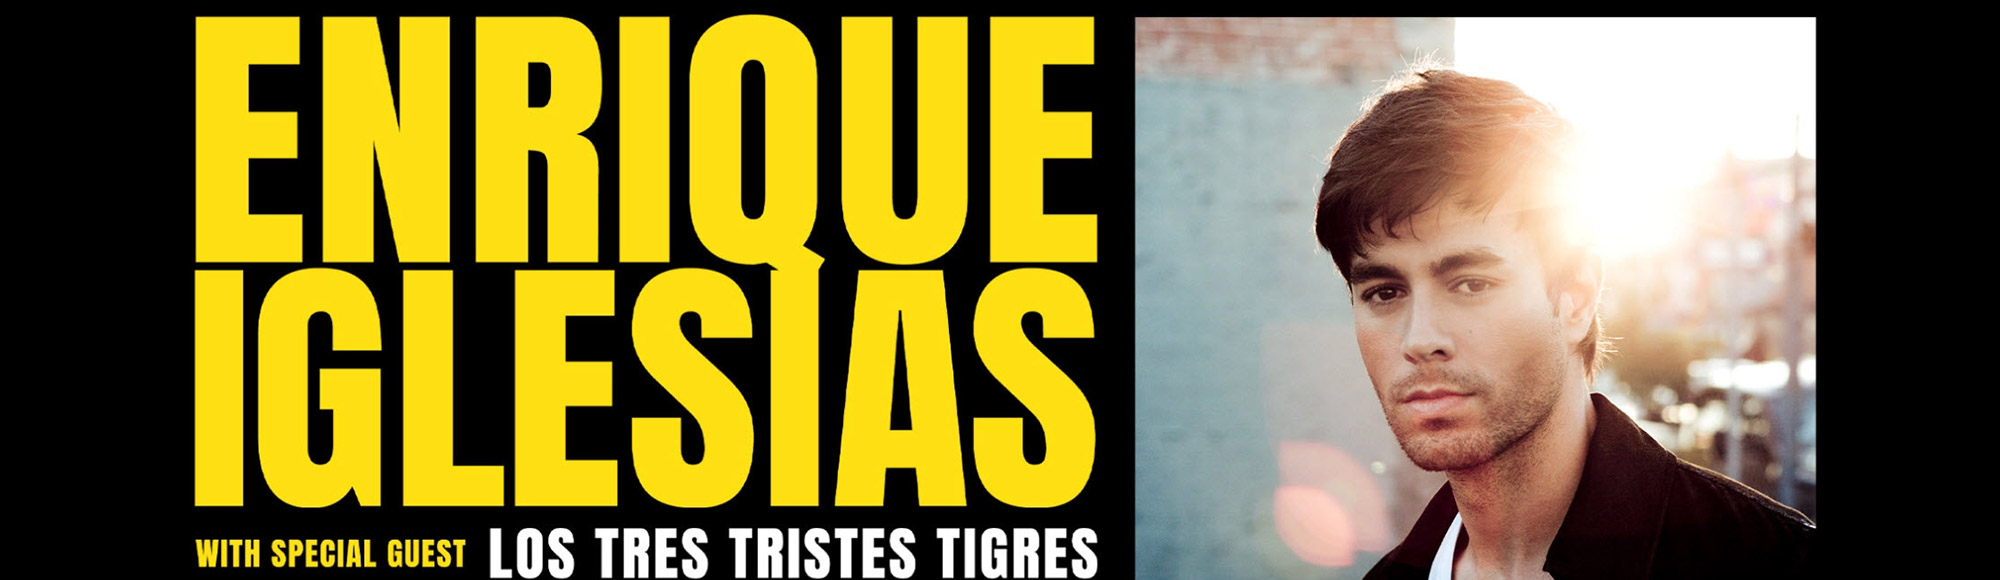 Enrique Iglesias show